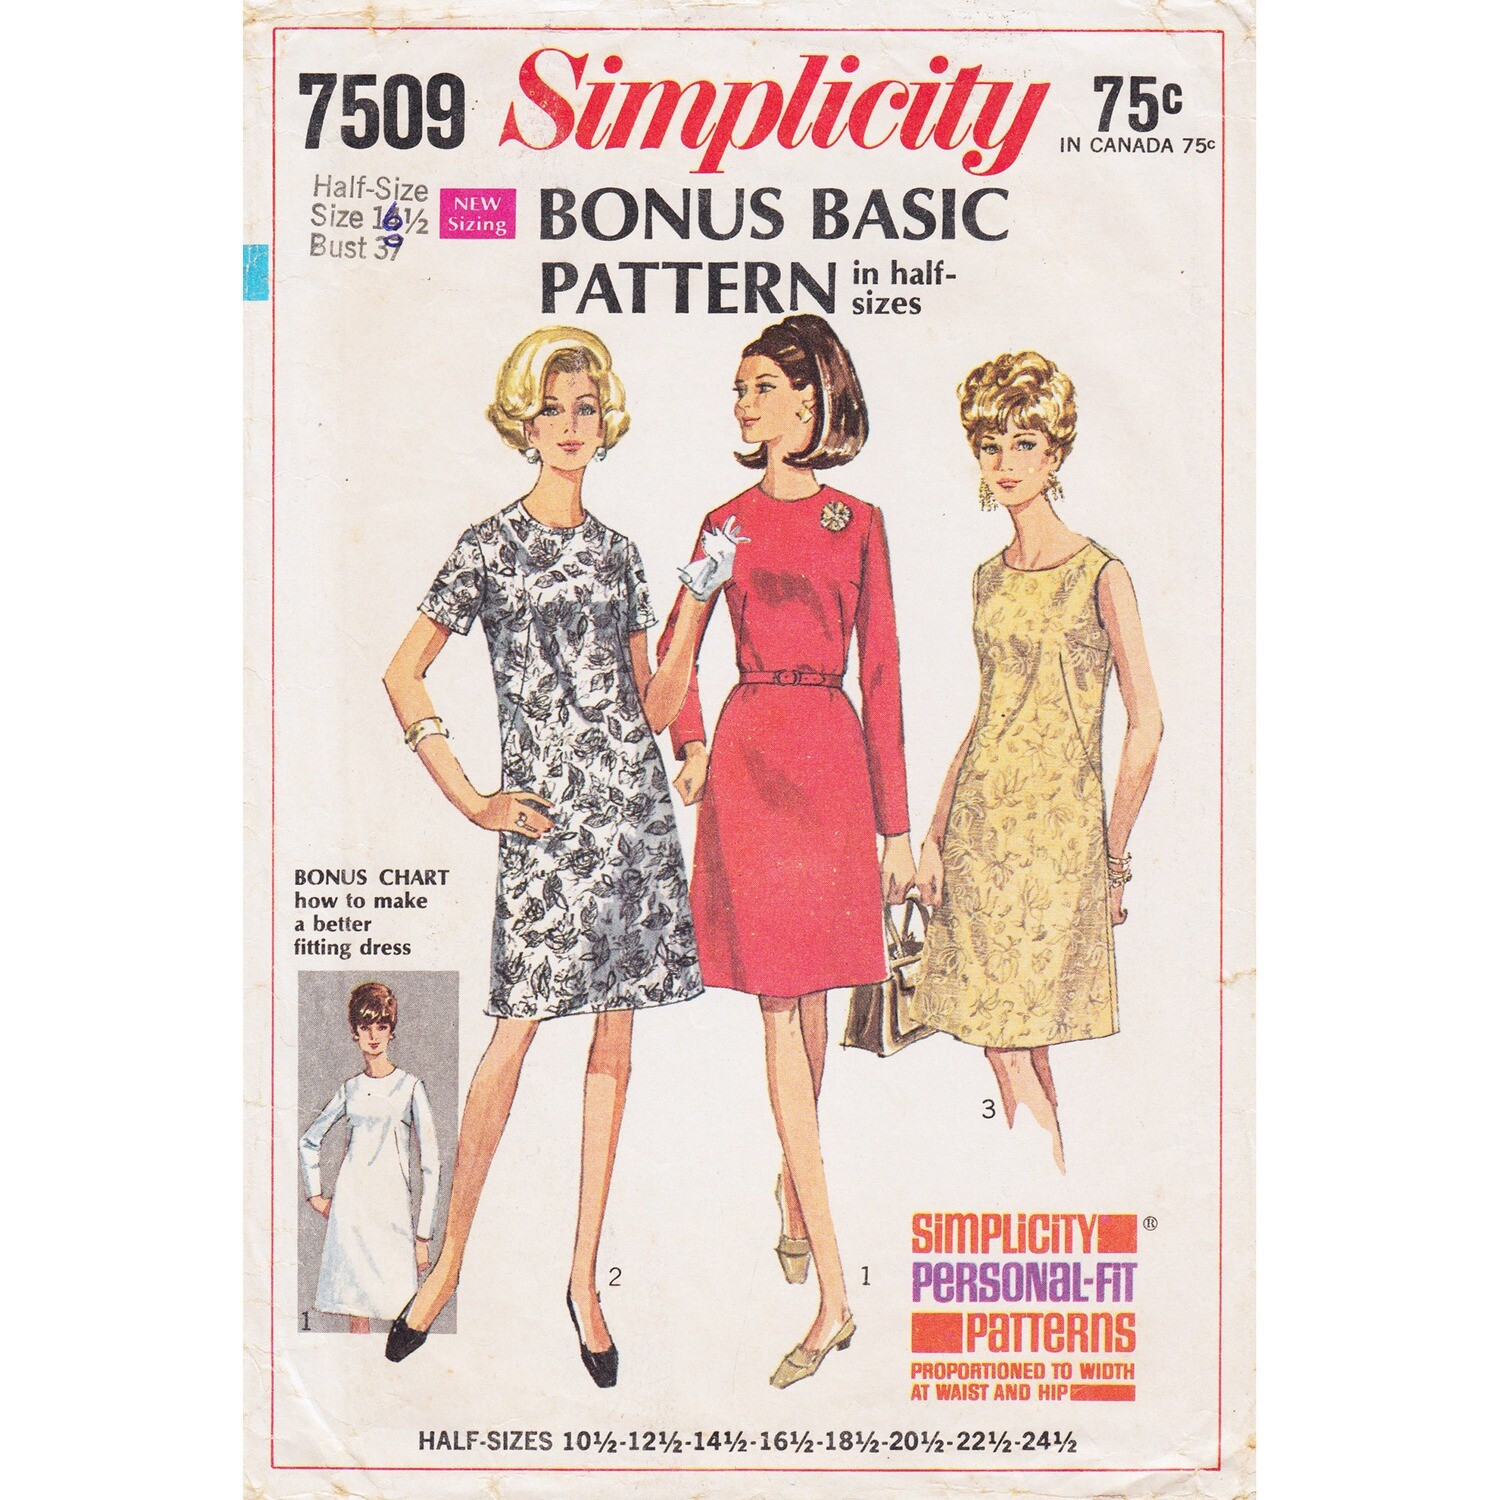 Simplicity 7509 pattern